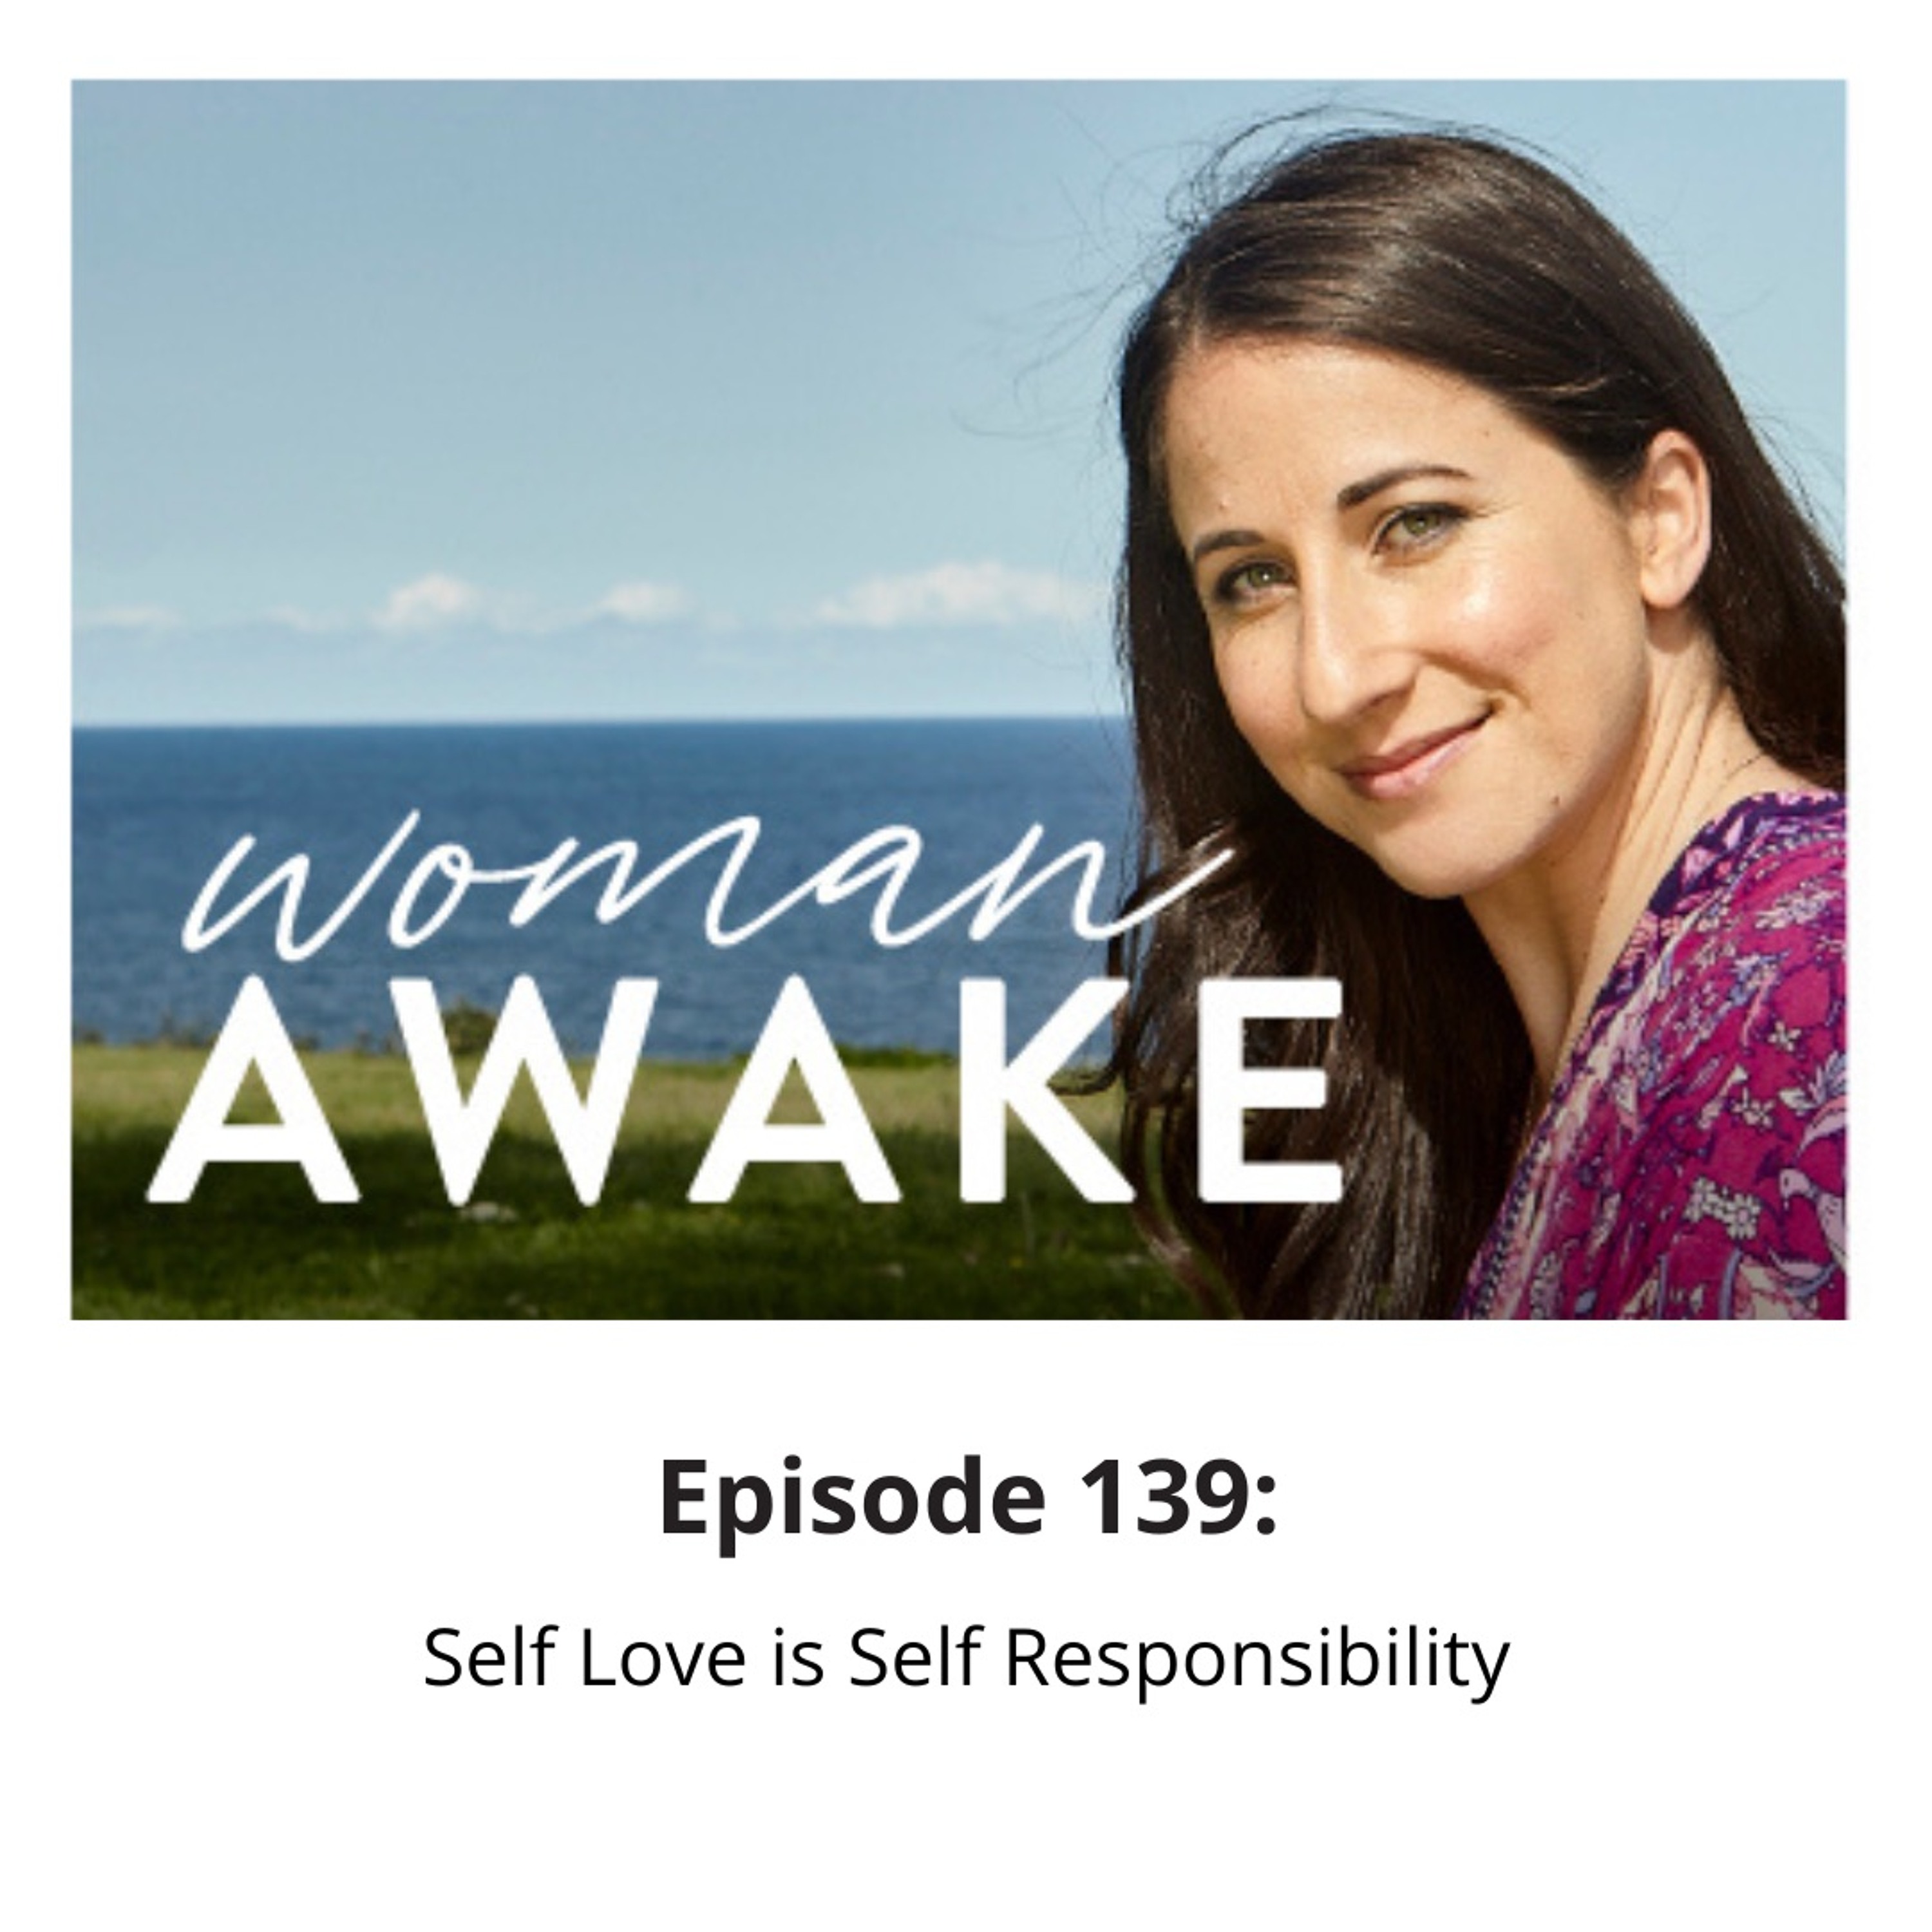 Woman Awake Episode 139 -  Self Love Is Self Responsibility